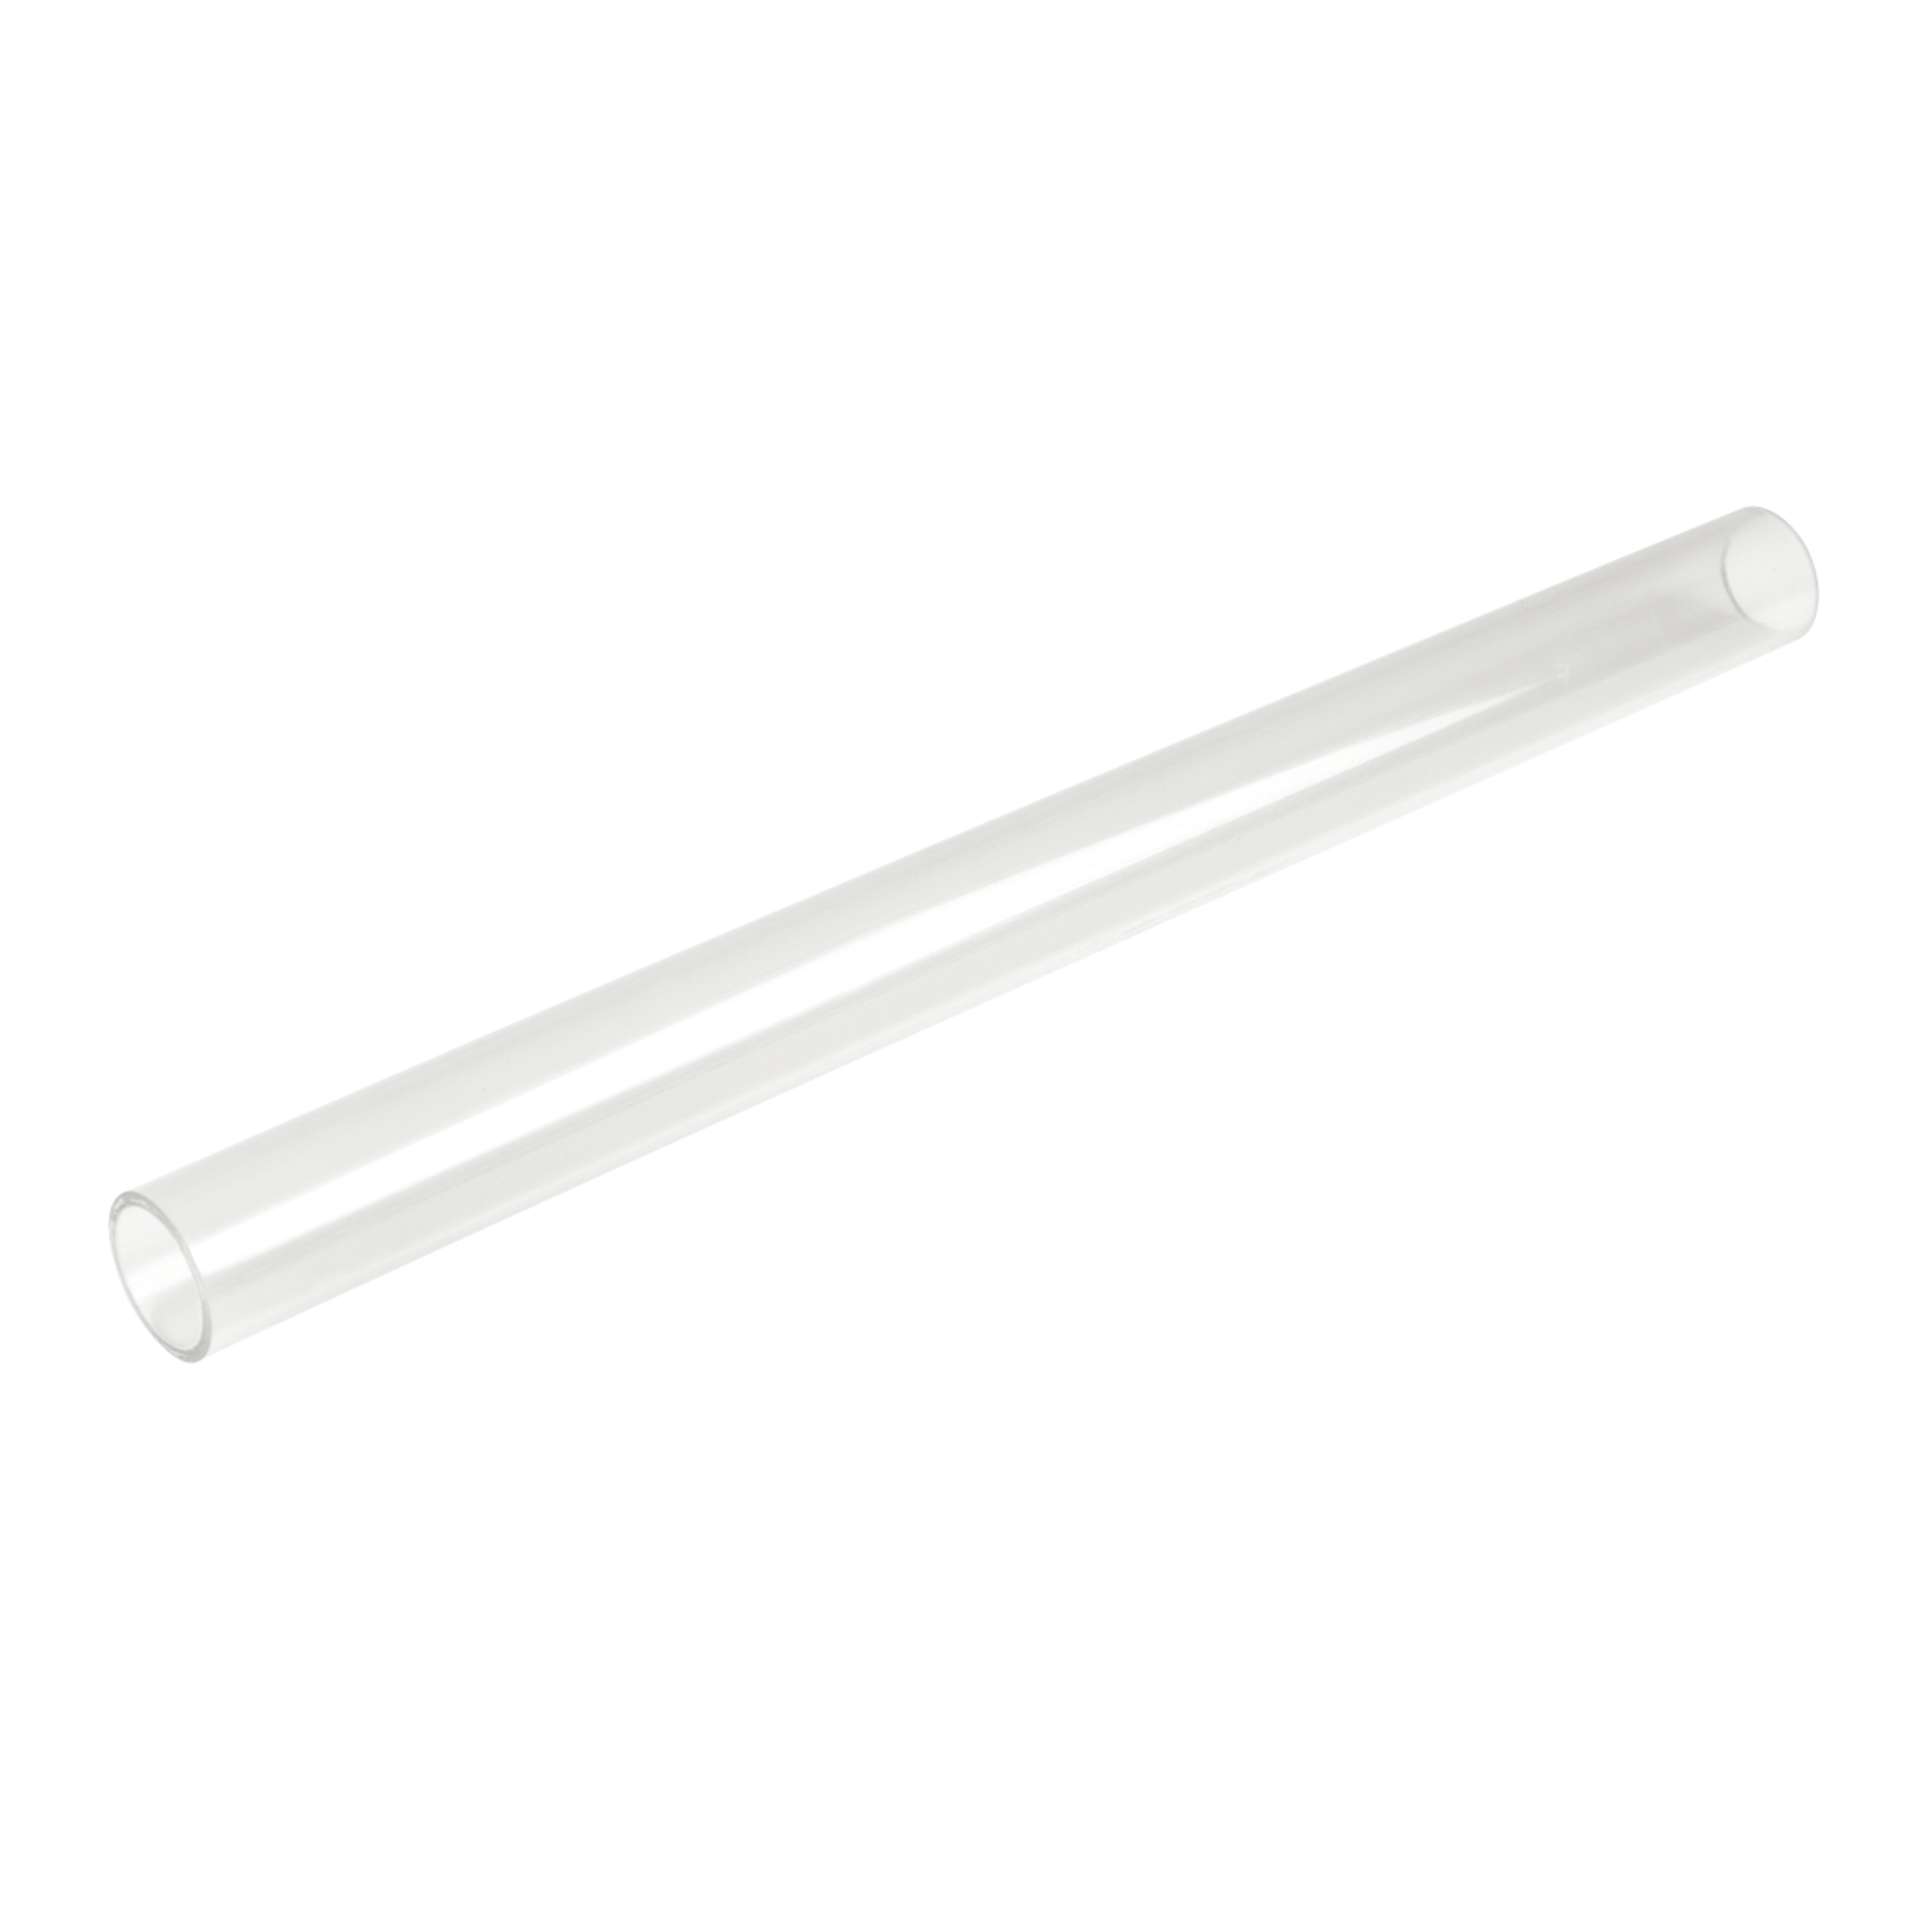 PVC Rohr transparent 90 mm, d=90 mm, Wandstärke 4,6 mm, Meterware